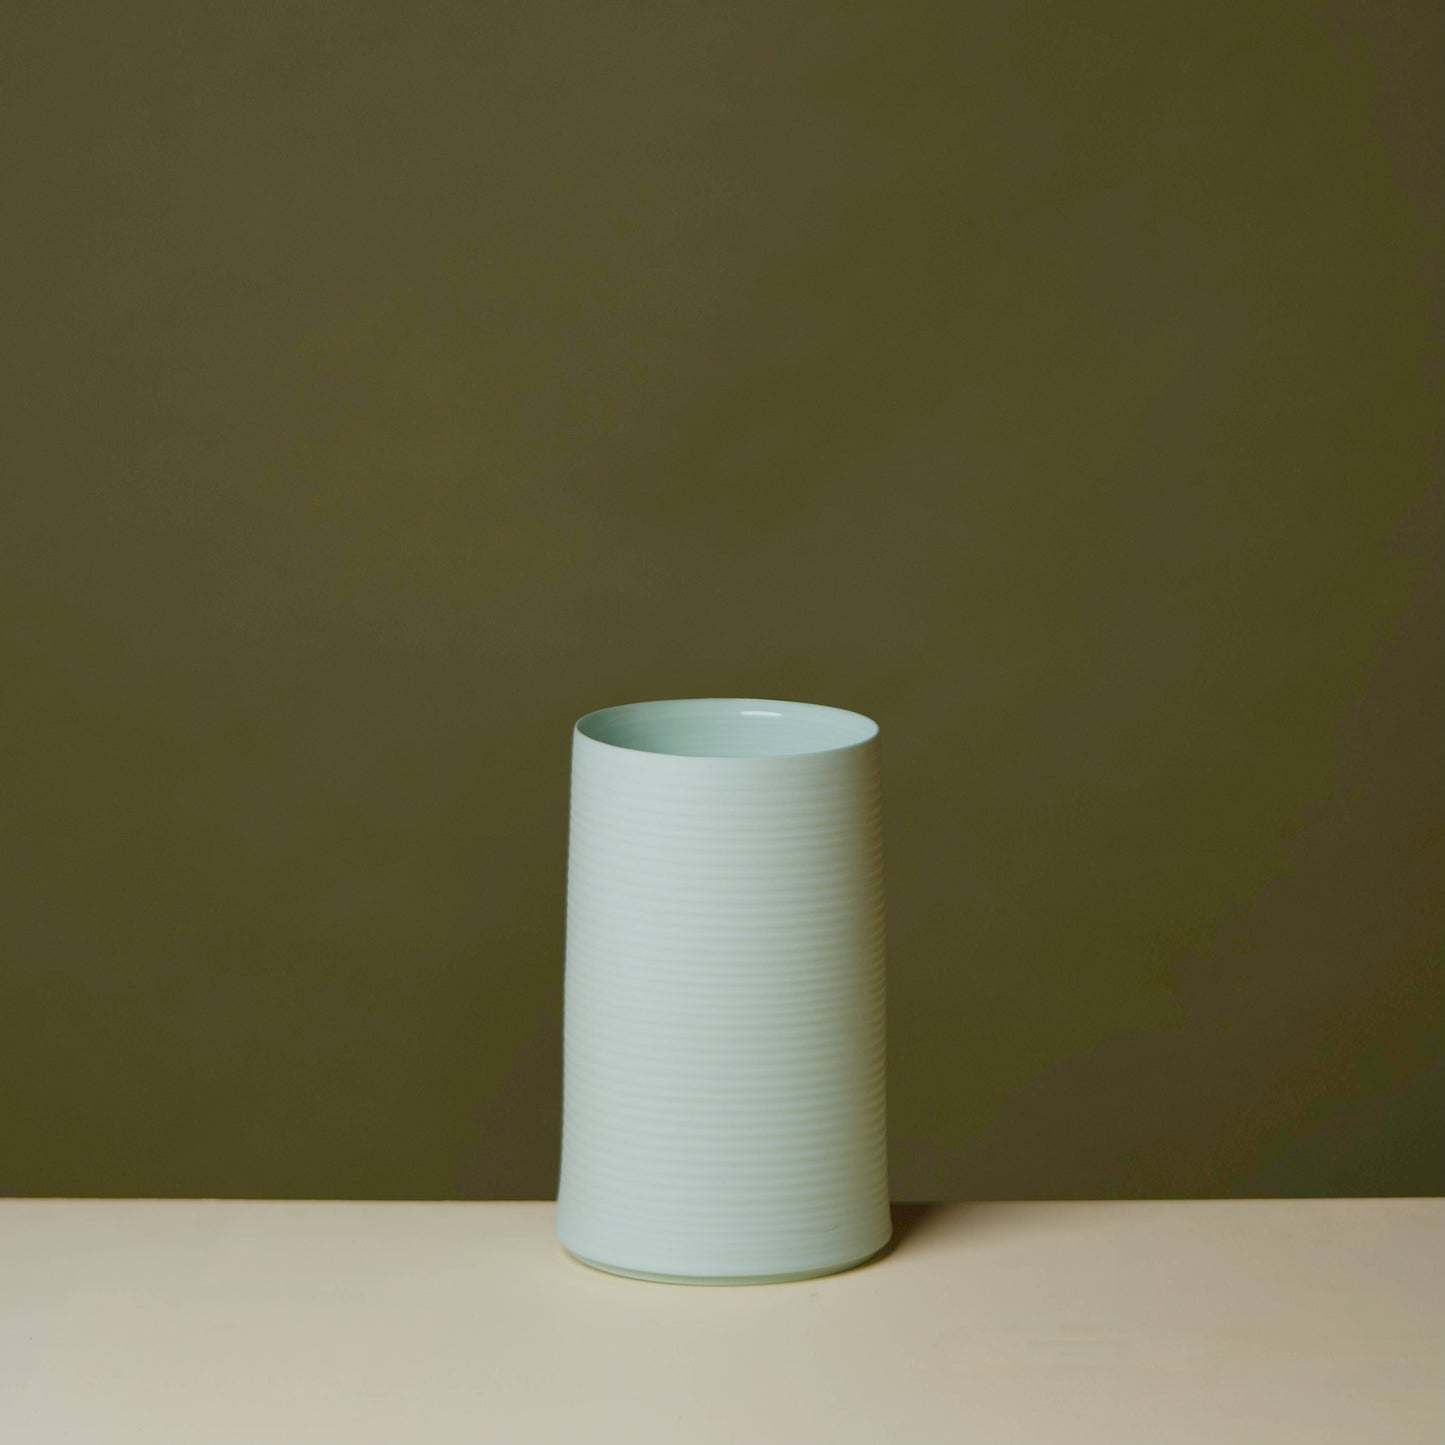 Cold Mountain Matte Porcelain Vase - Small: Bisque